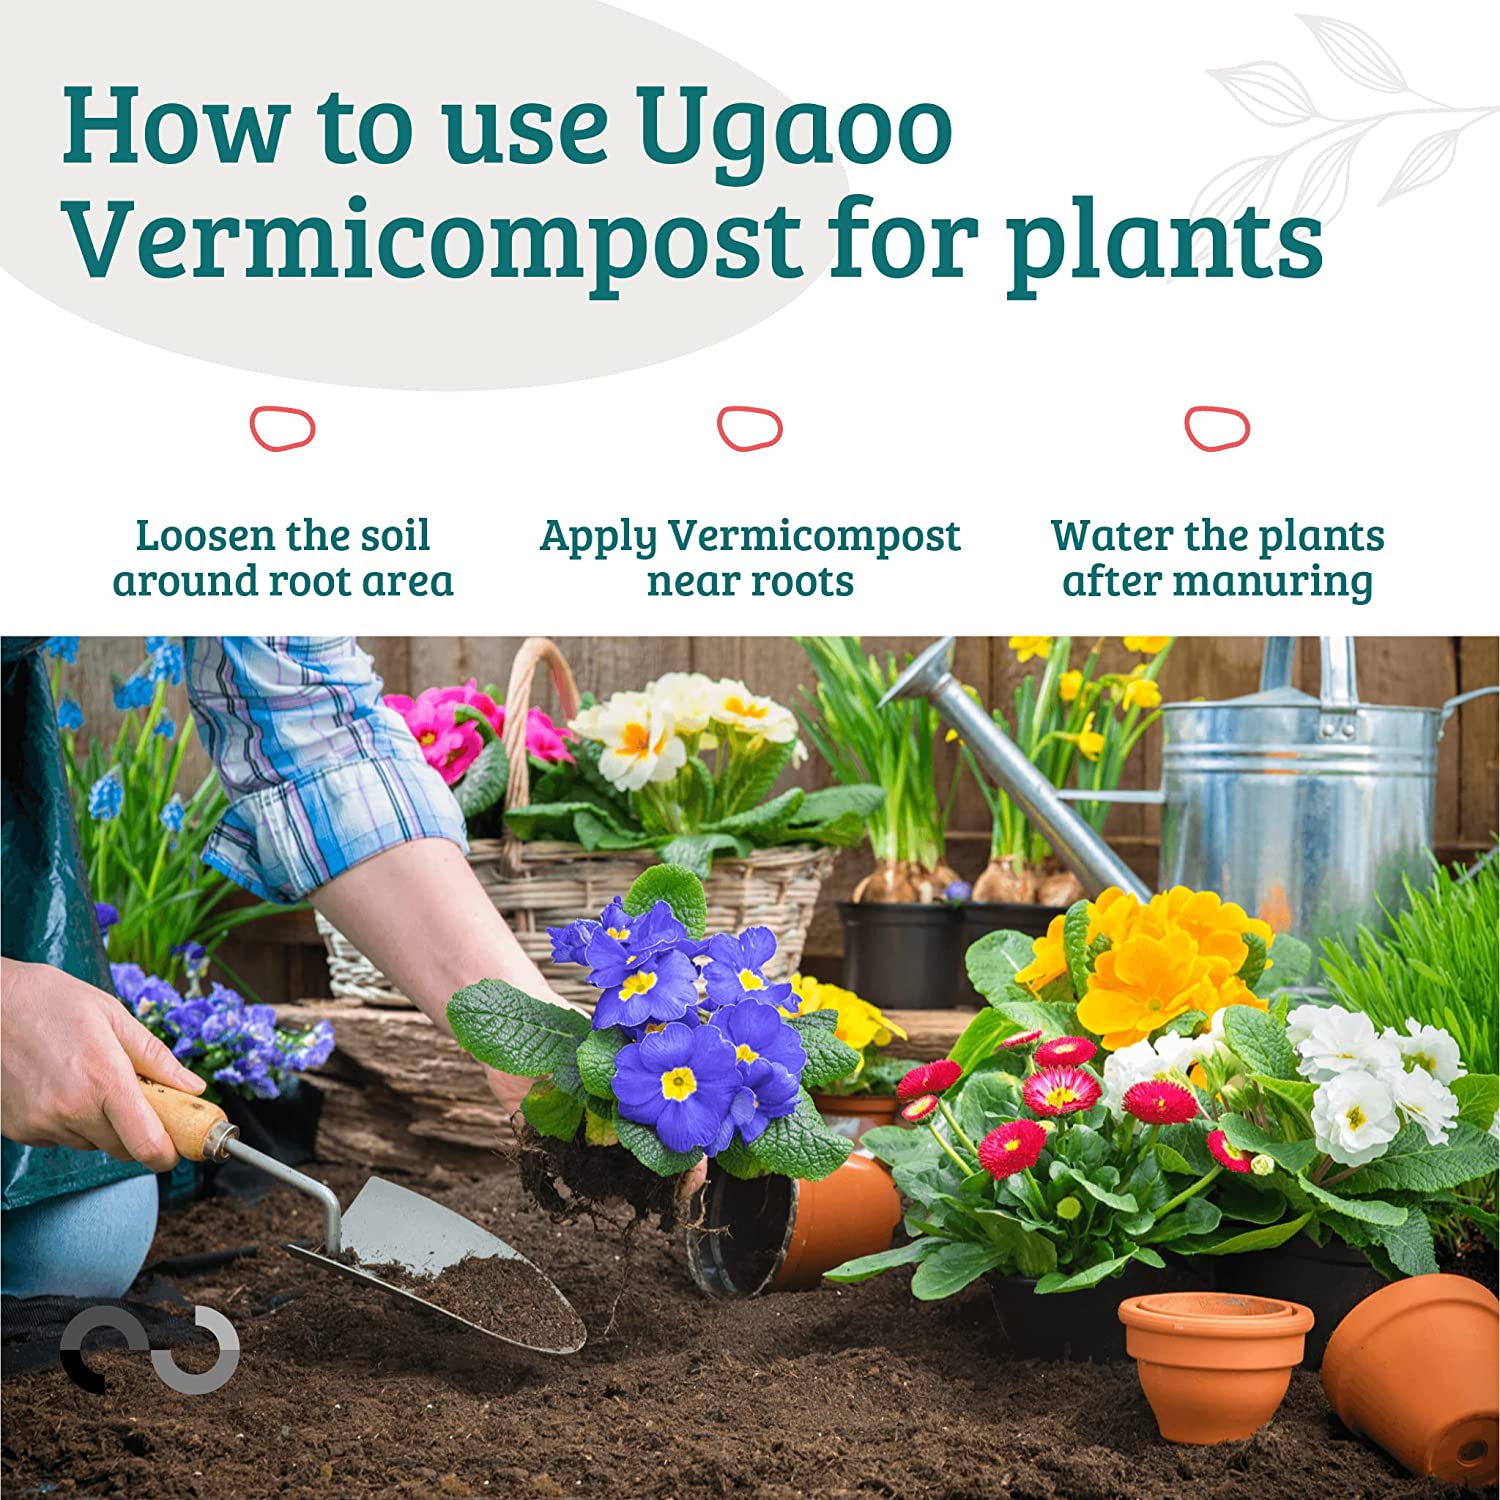 ugaoo vermicompost for plants 5 kg organic fertilizer & manure